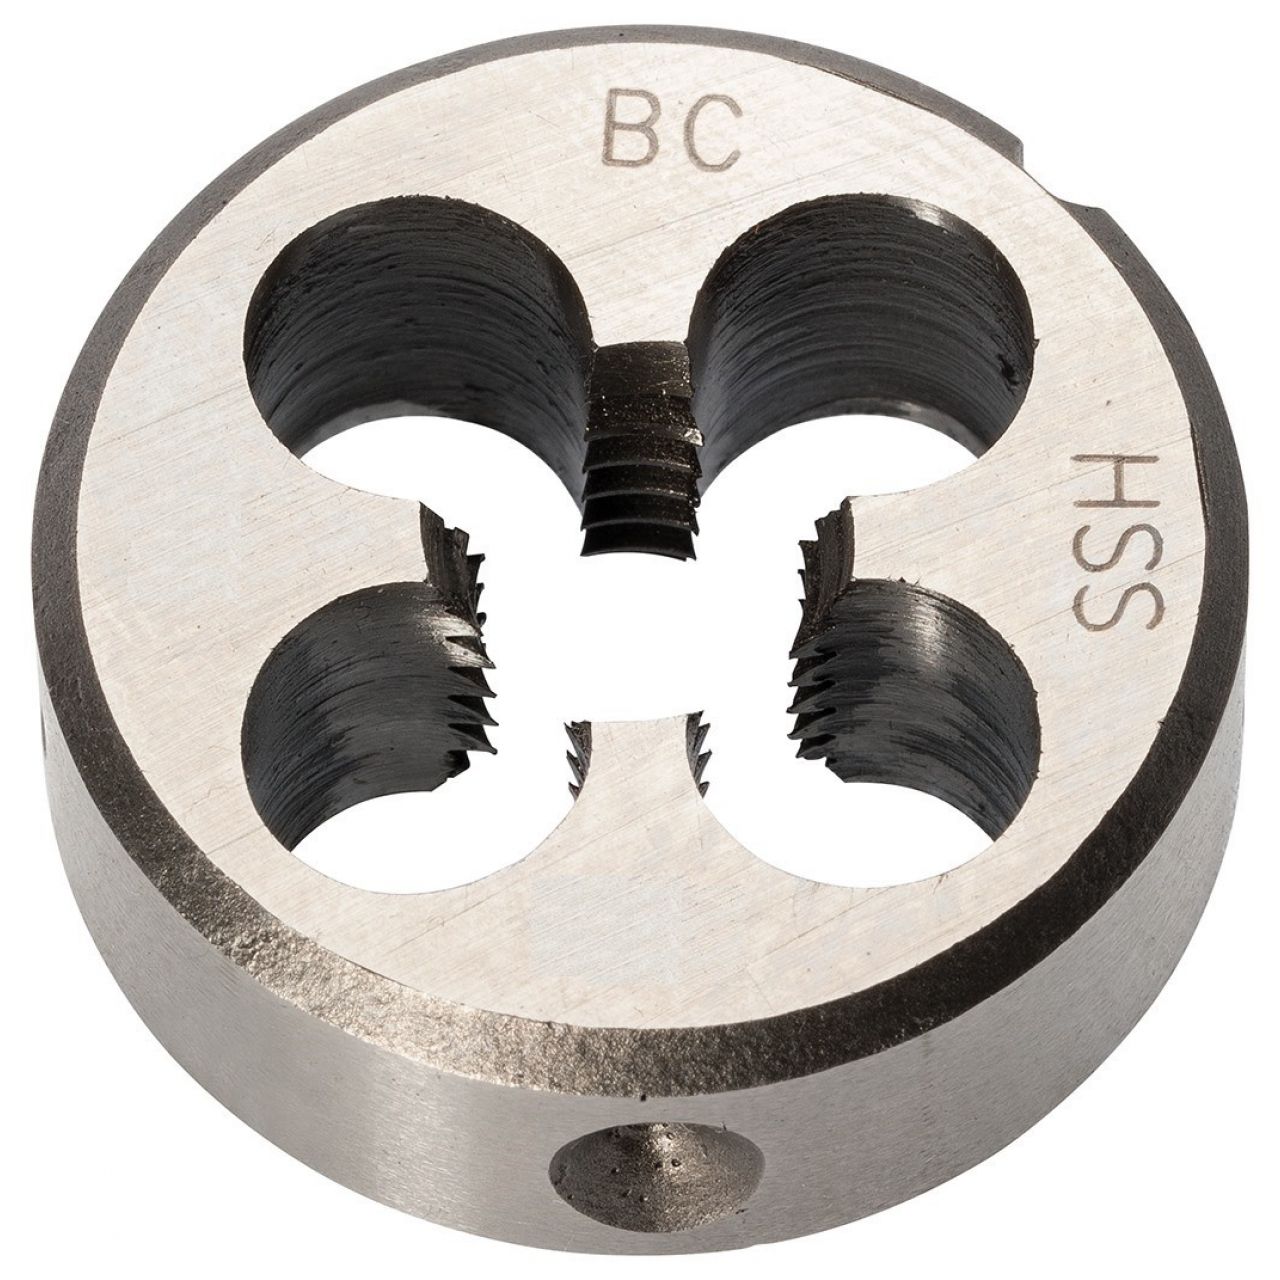 Bohrcraft Terraja forma B HSS // UNC  No. 5 x 40 BC-UB